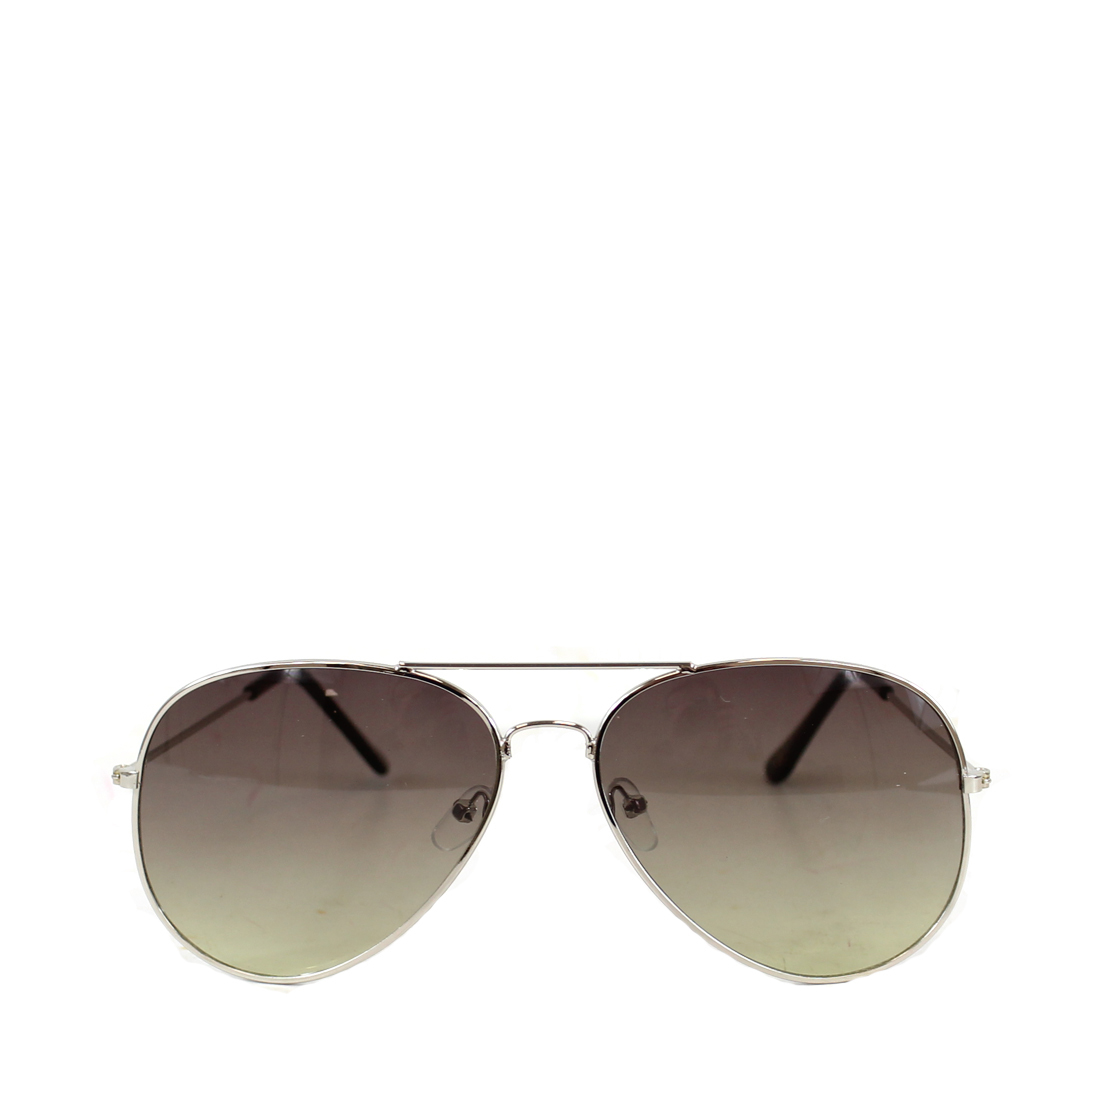 * Aviator Classic Sunglasses